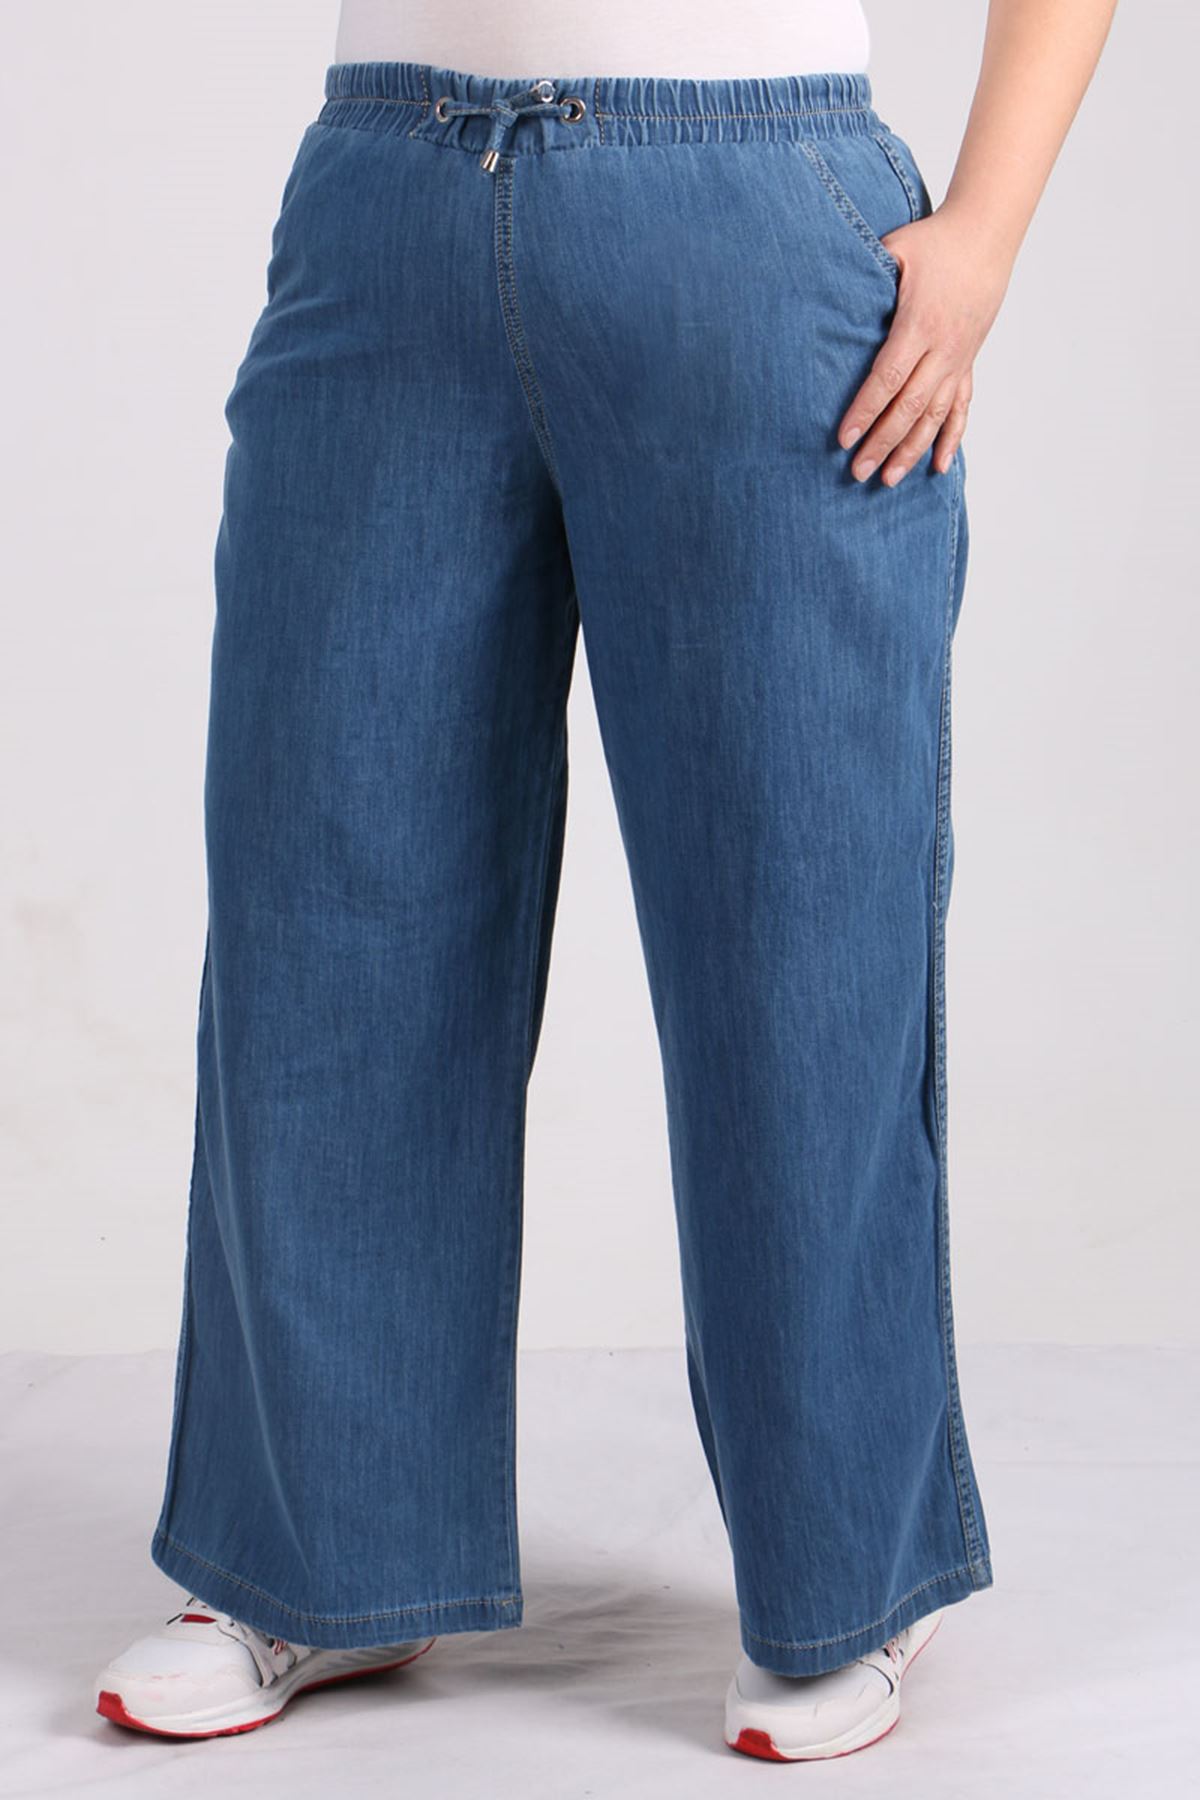 29000 Plus Size Plentiful Trotter Jeans Pants - Light Navy blue